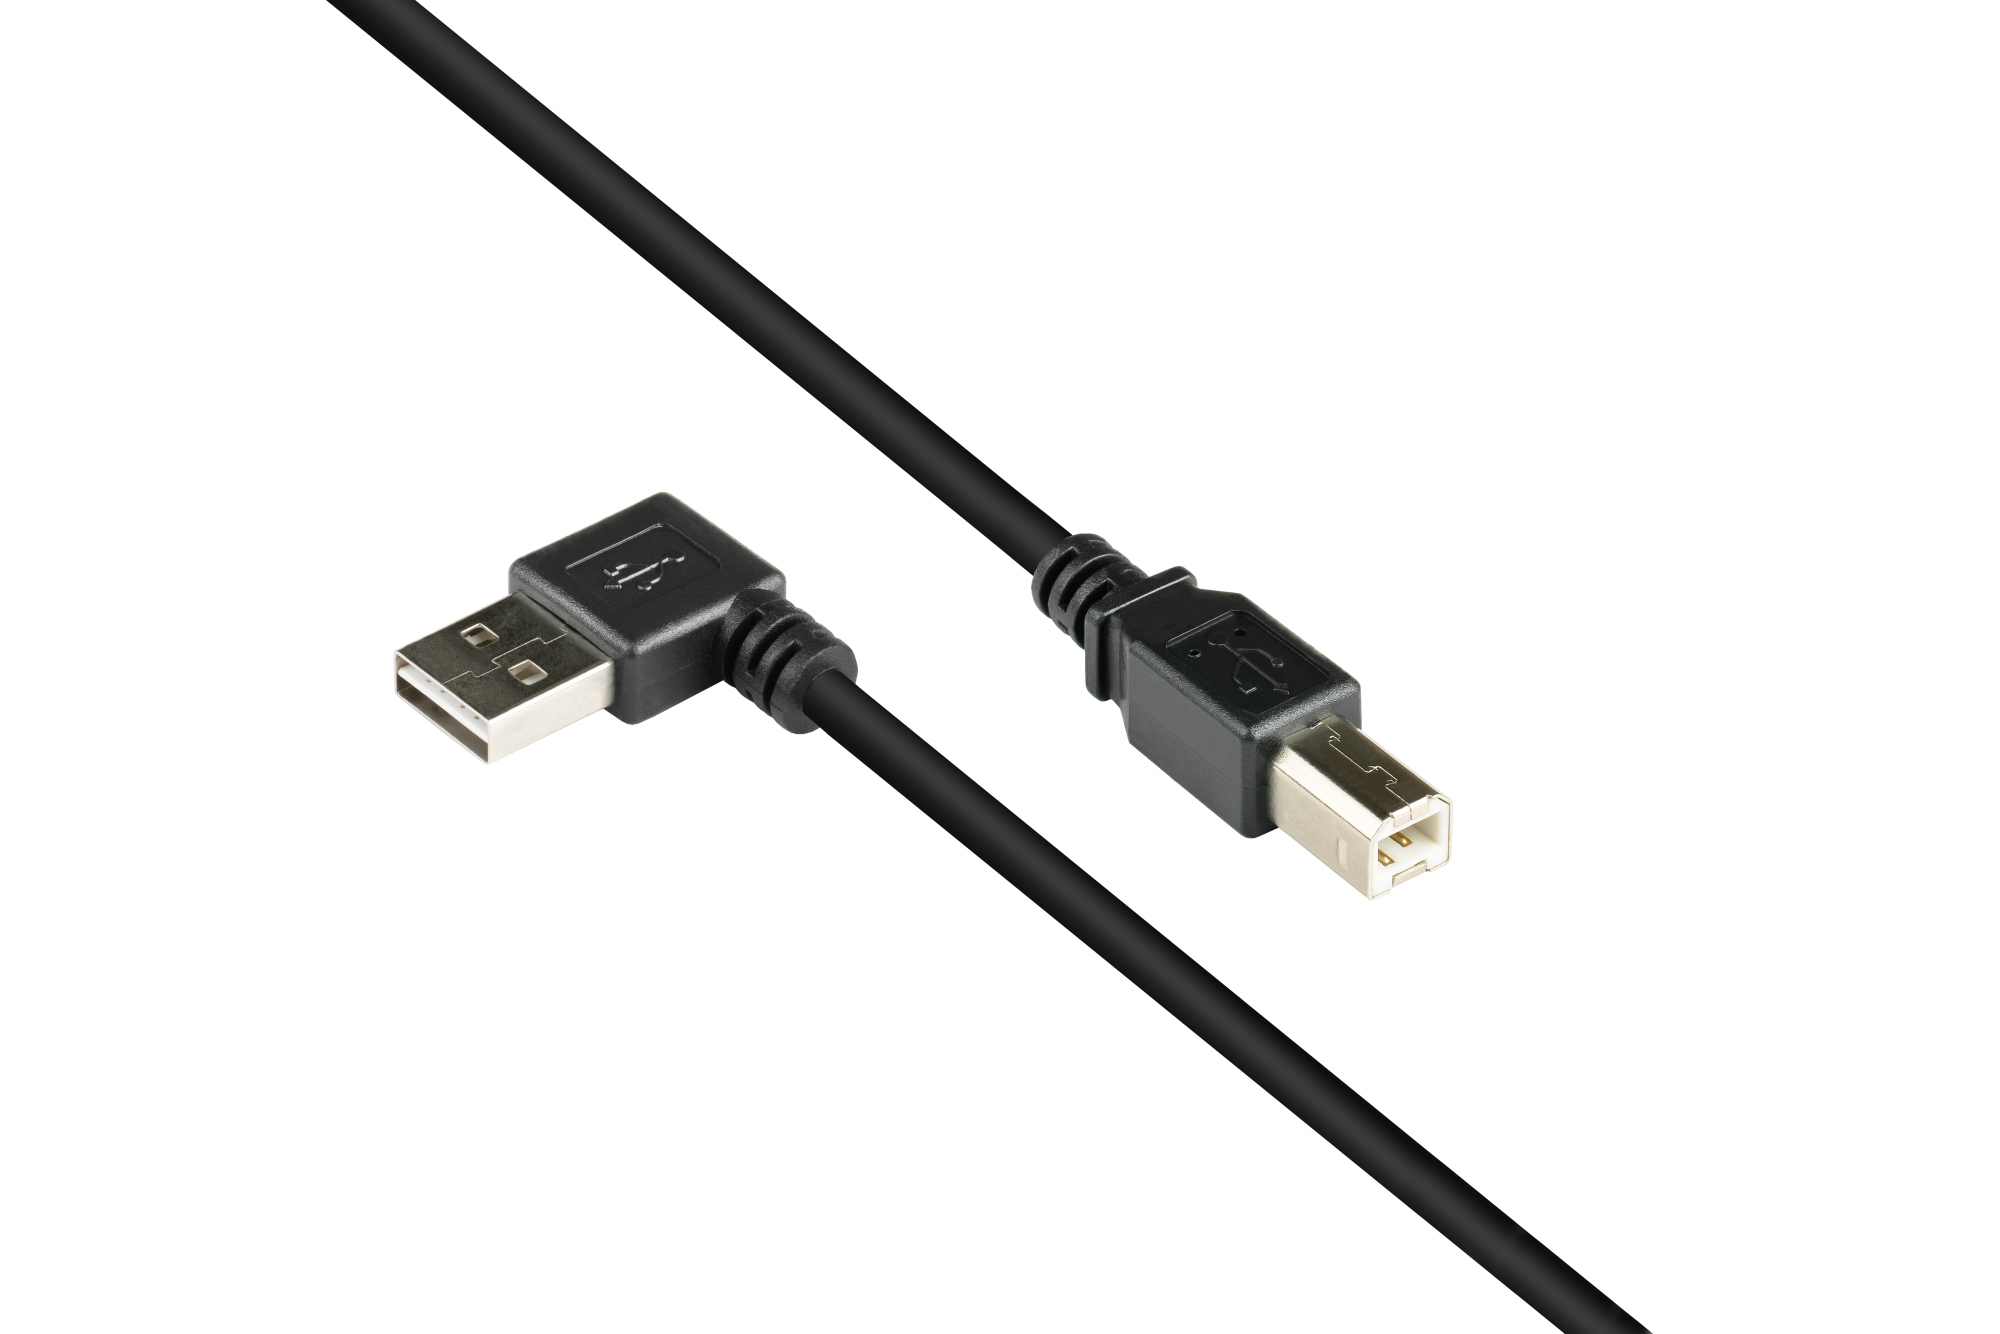 Anschlusskabel USB 2.0 EASY Stecker A gewinkelt an Stecker B, schwarz, 2m